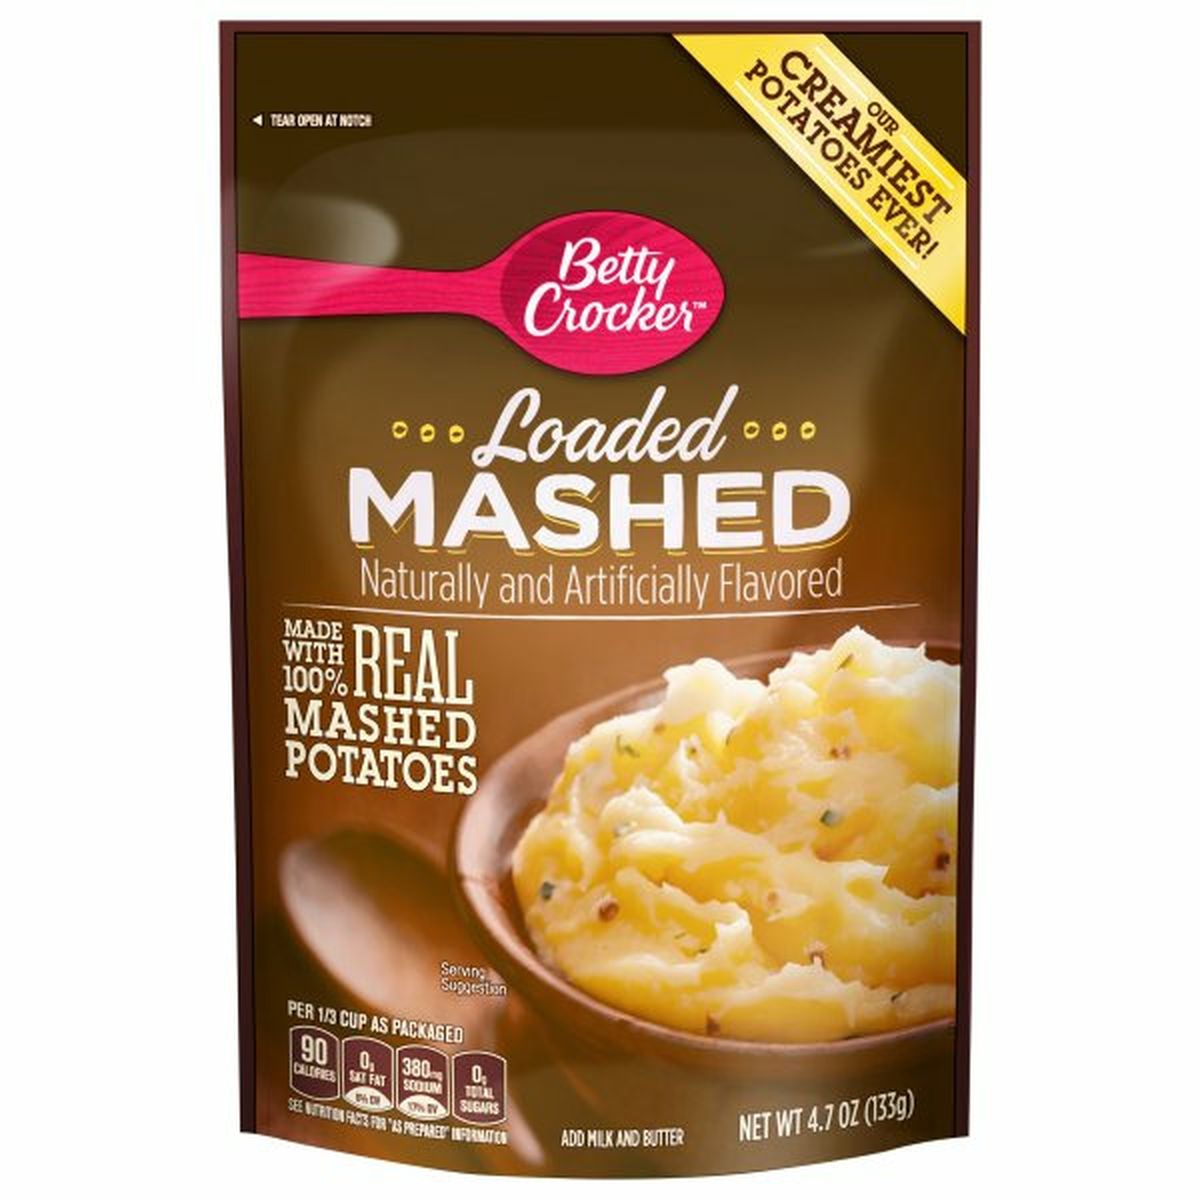 Calories in Betty Crocker Mashed Potatoes, Loaded